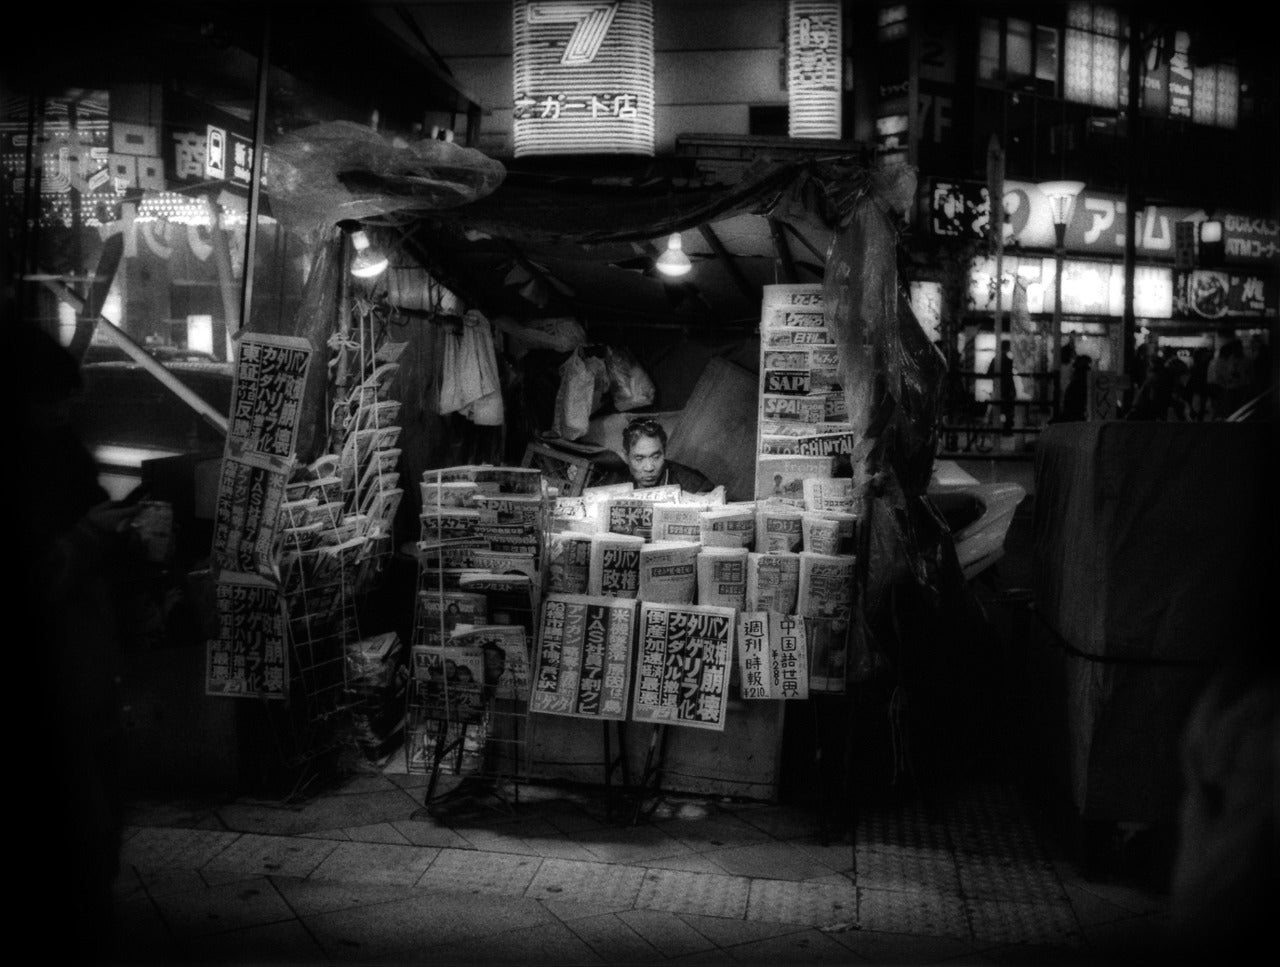 James Whitlow Delano Landscape Photograph - Newsstand at Night, Shinjuko, Tokyo